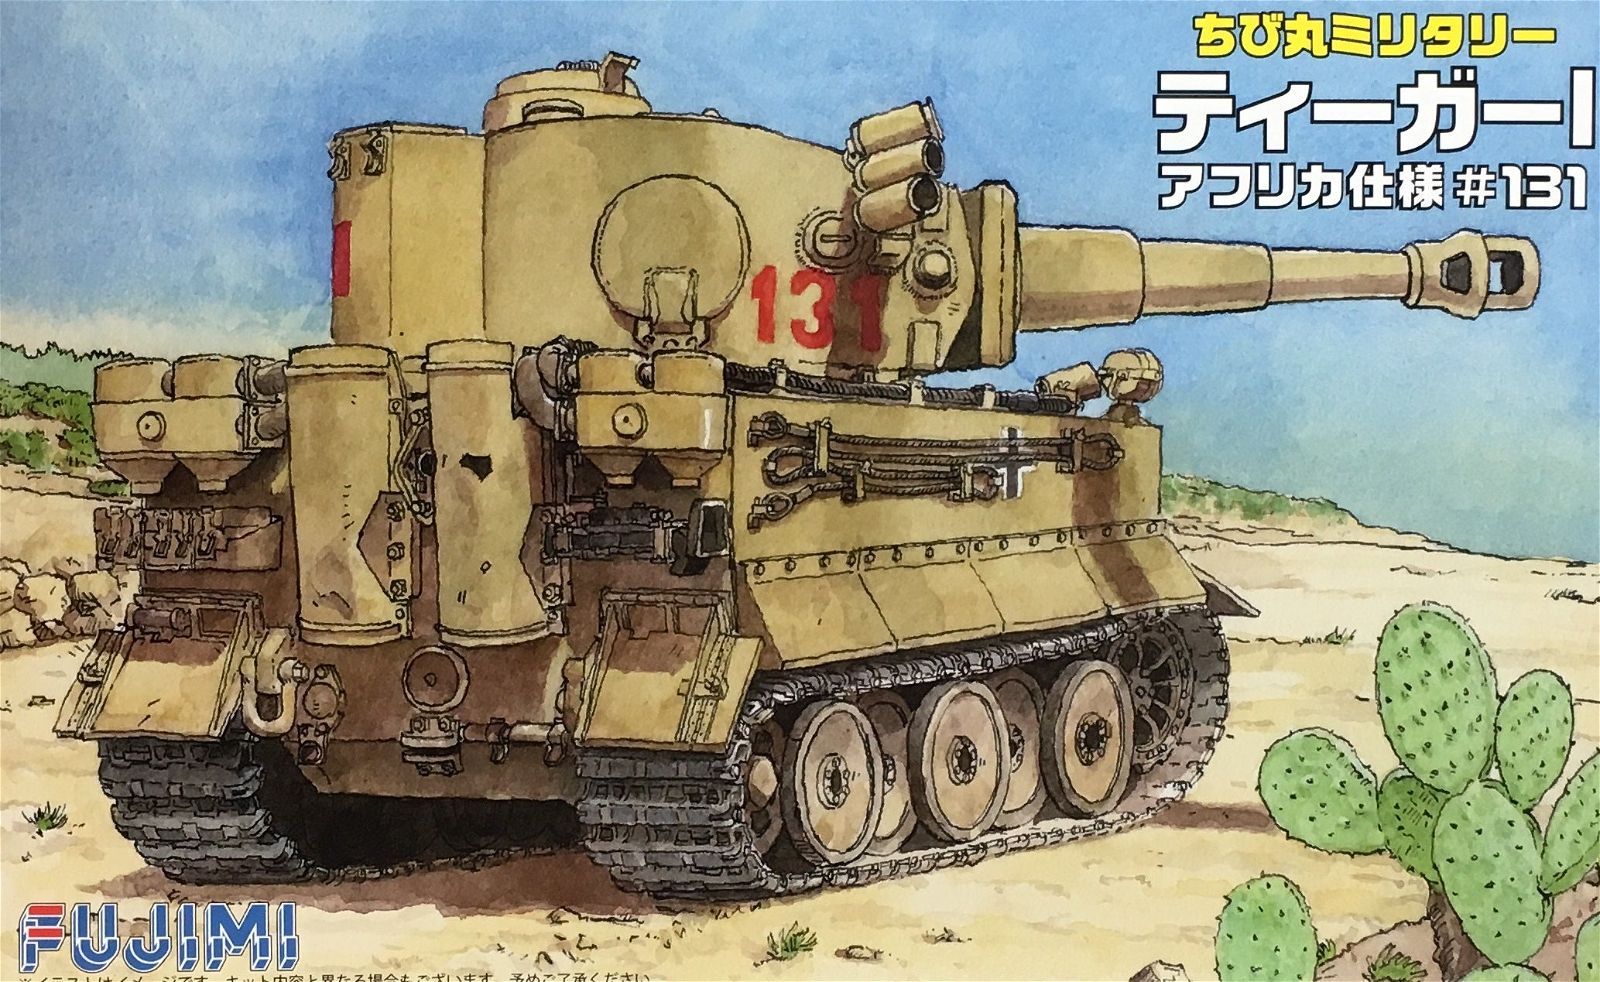 Fujimi TM8 Tiger I Africa-Corps #131 - BanzaiHobby